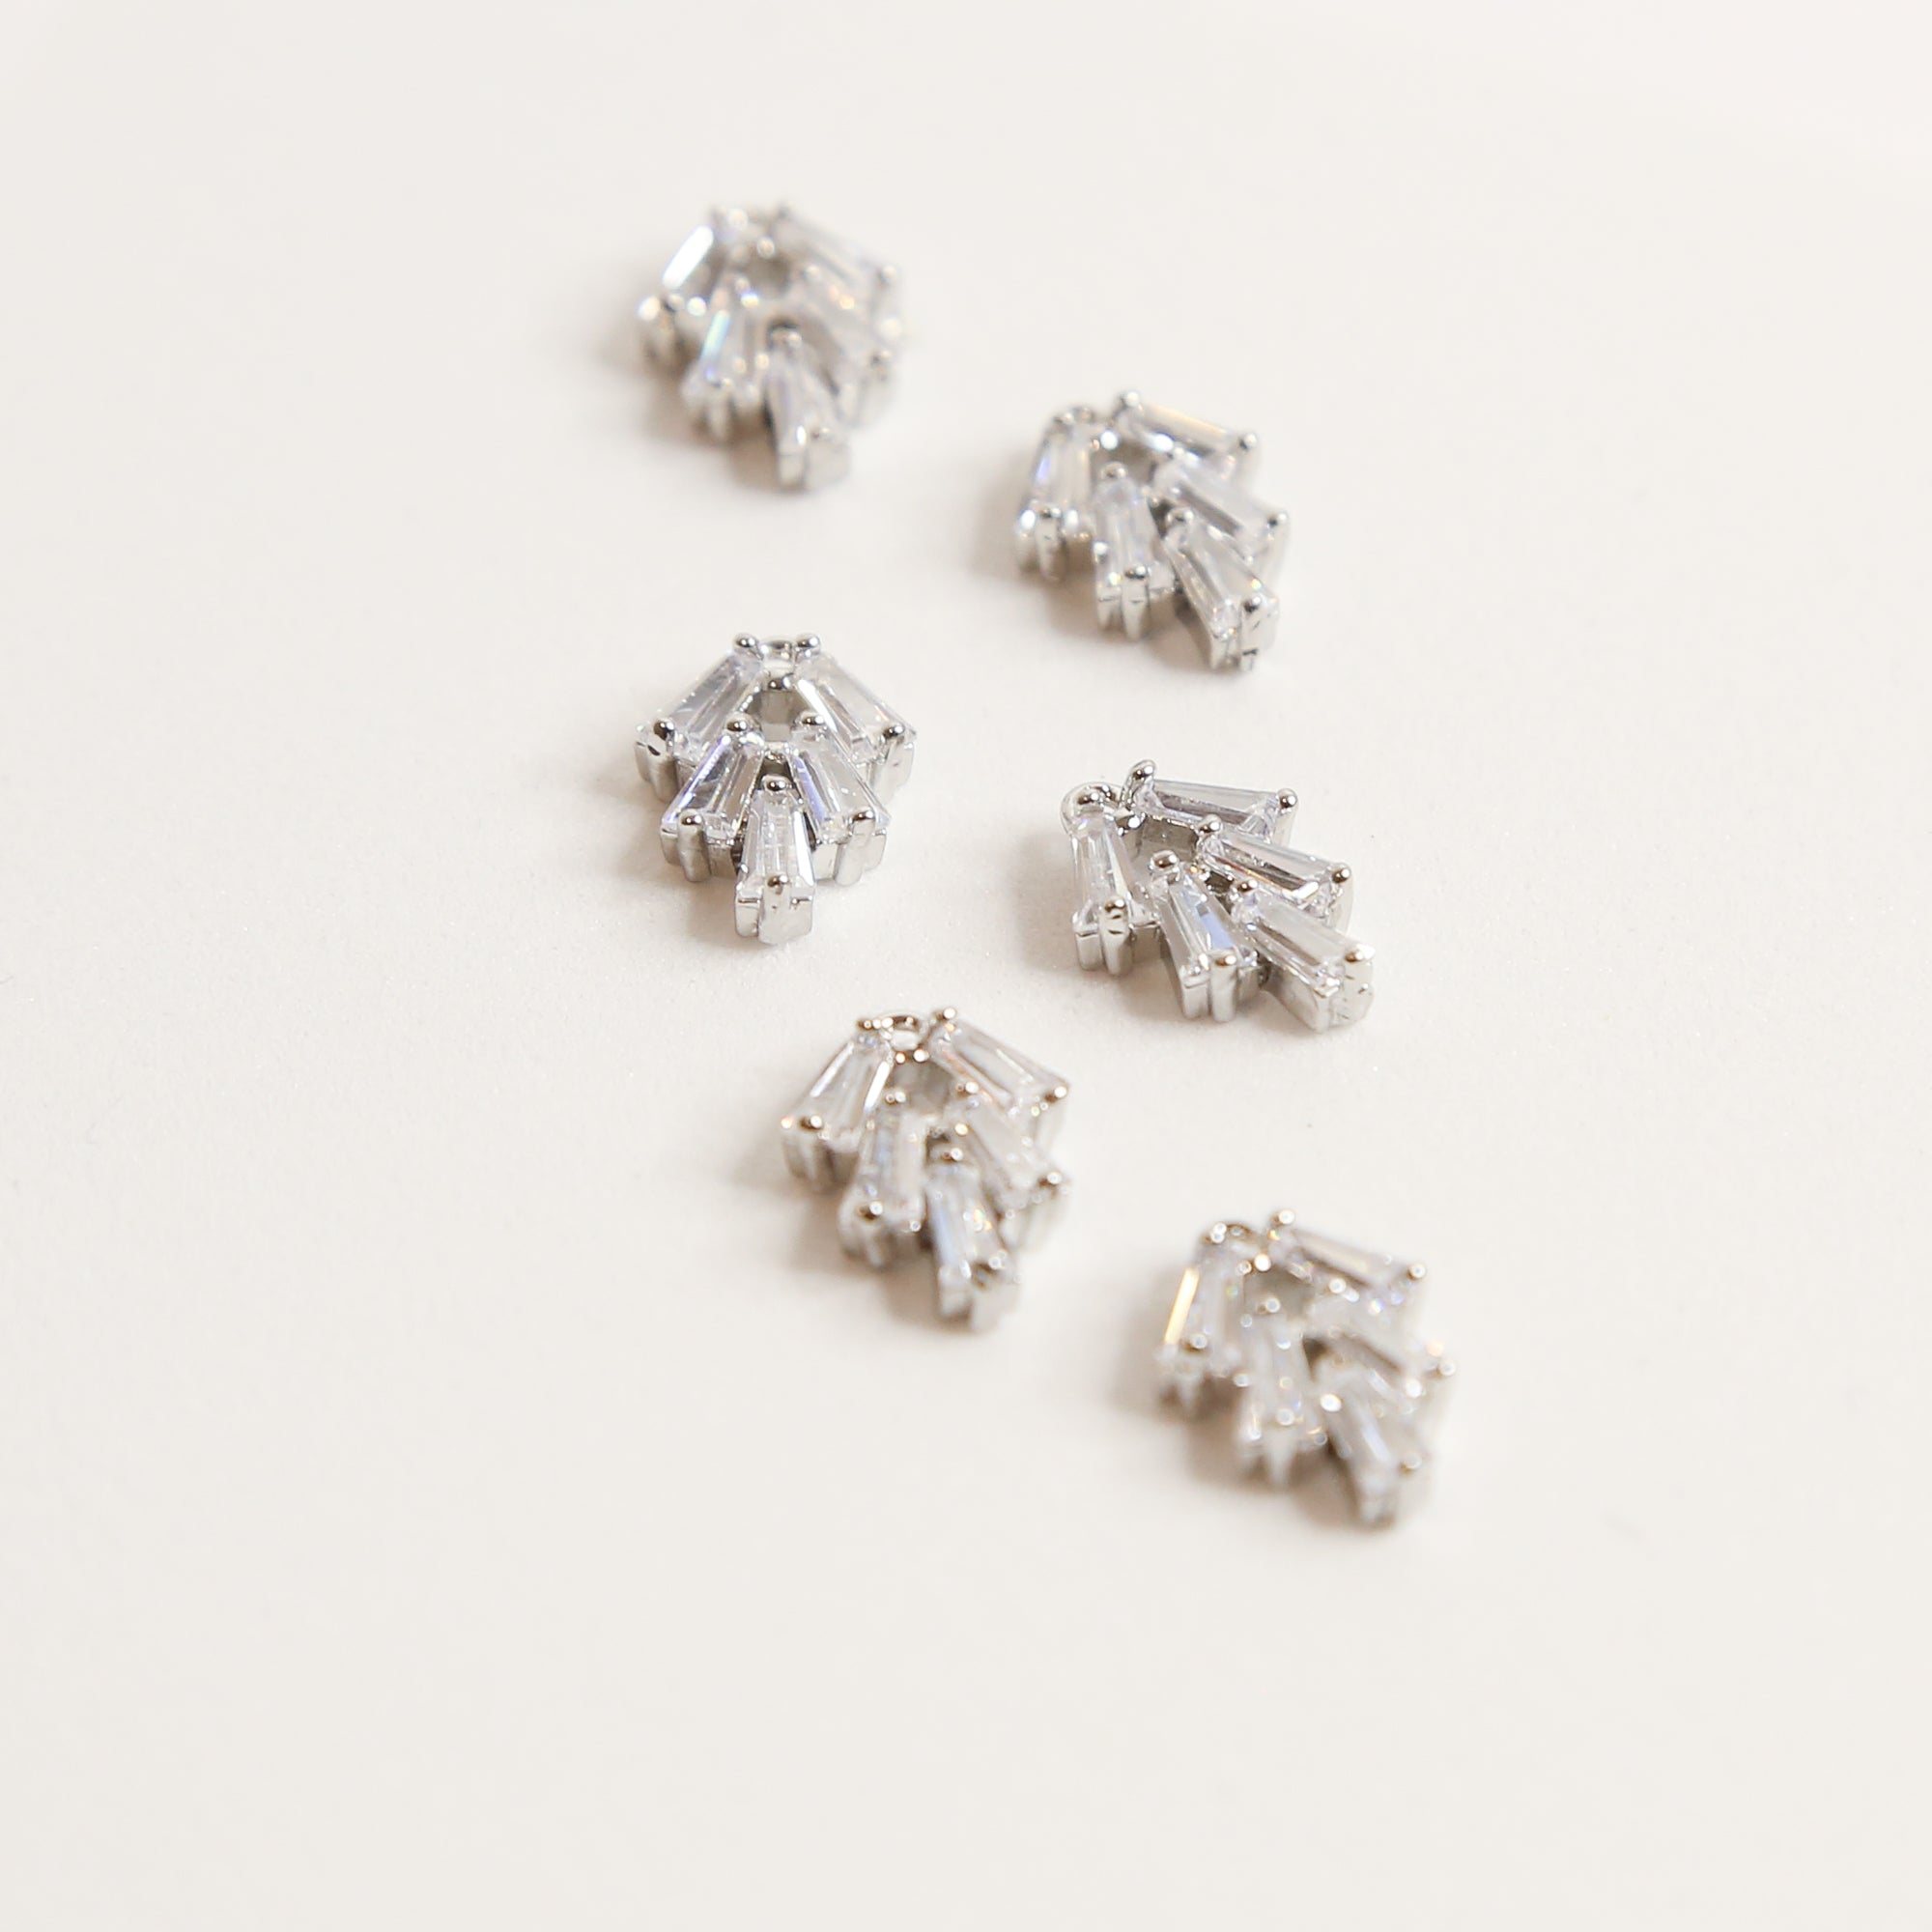 Cubic Zirconia - Diamond Kite Charm - 10 pieces